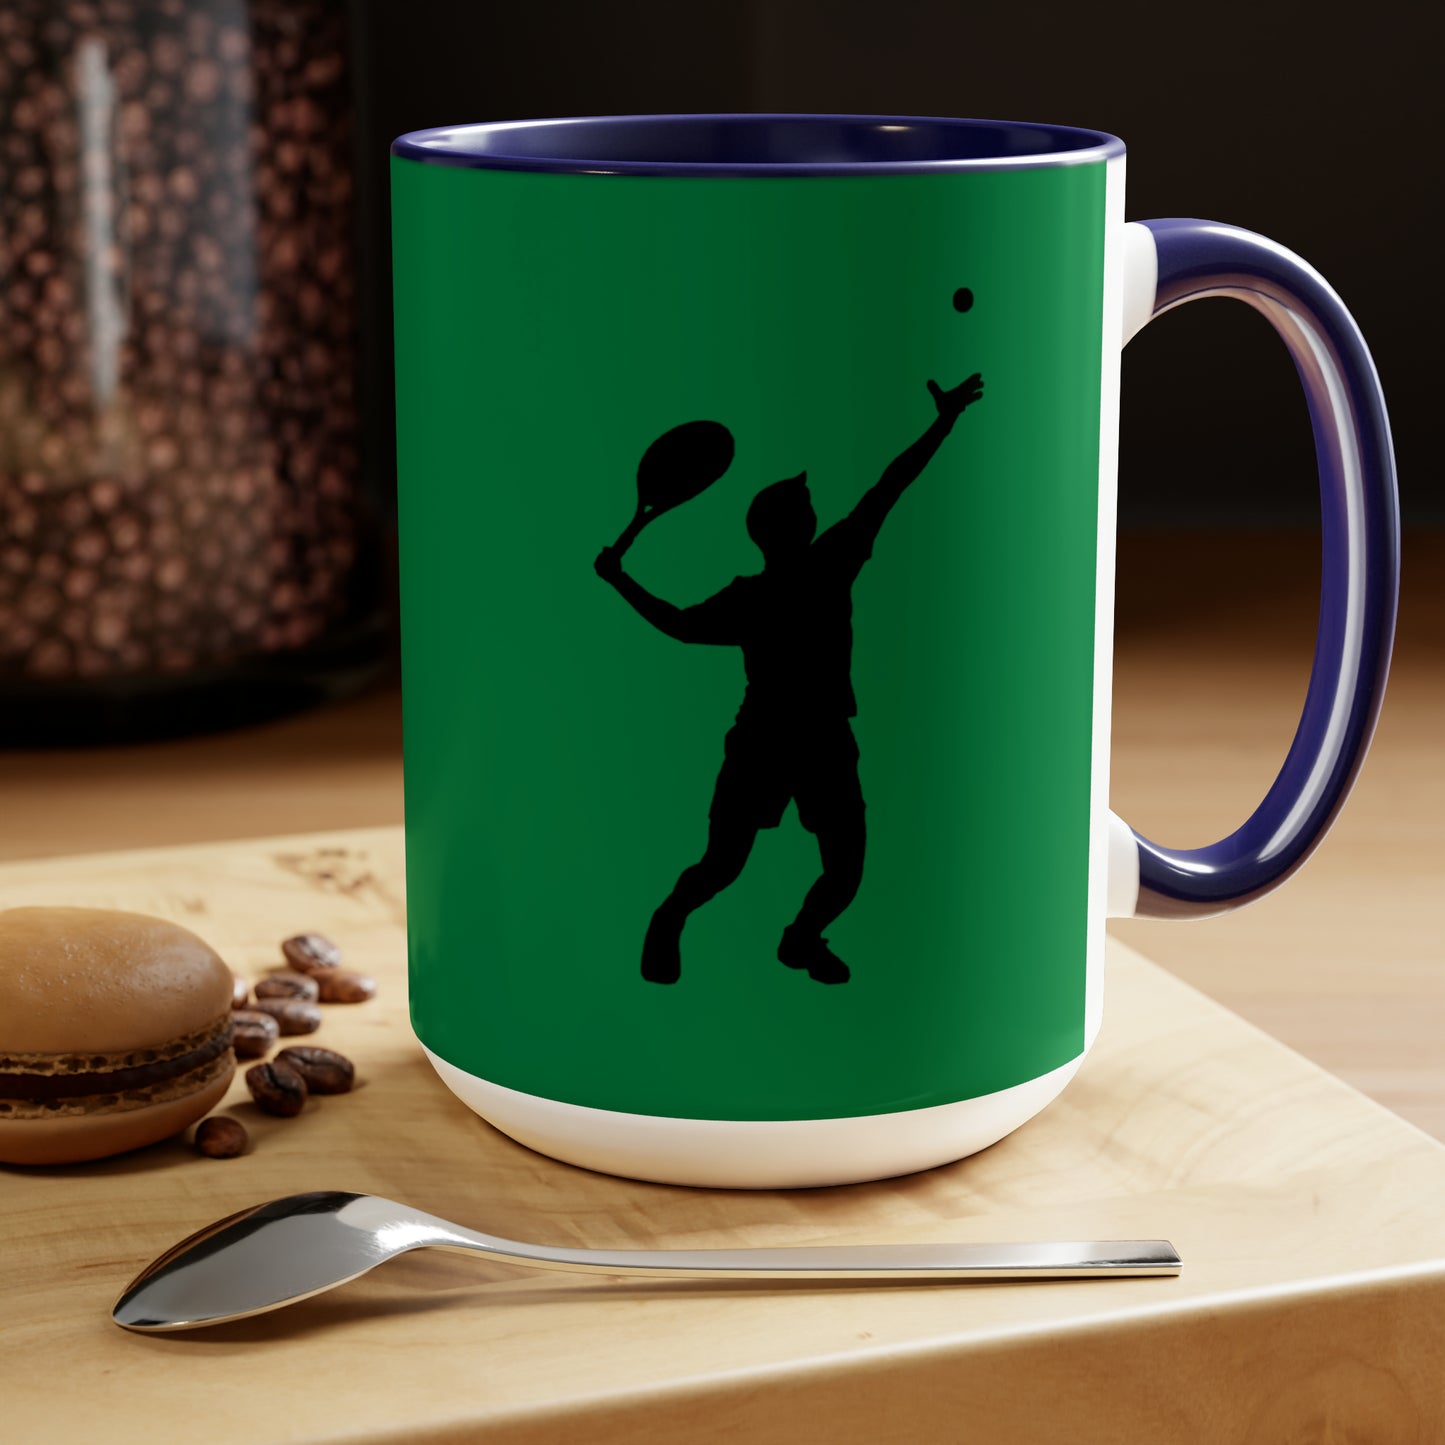 Two-Tone Coffee Mugs, 15oz: Tennis Dark Green